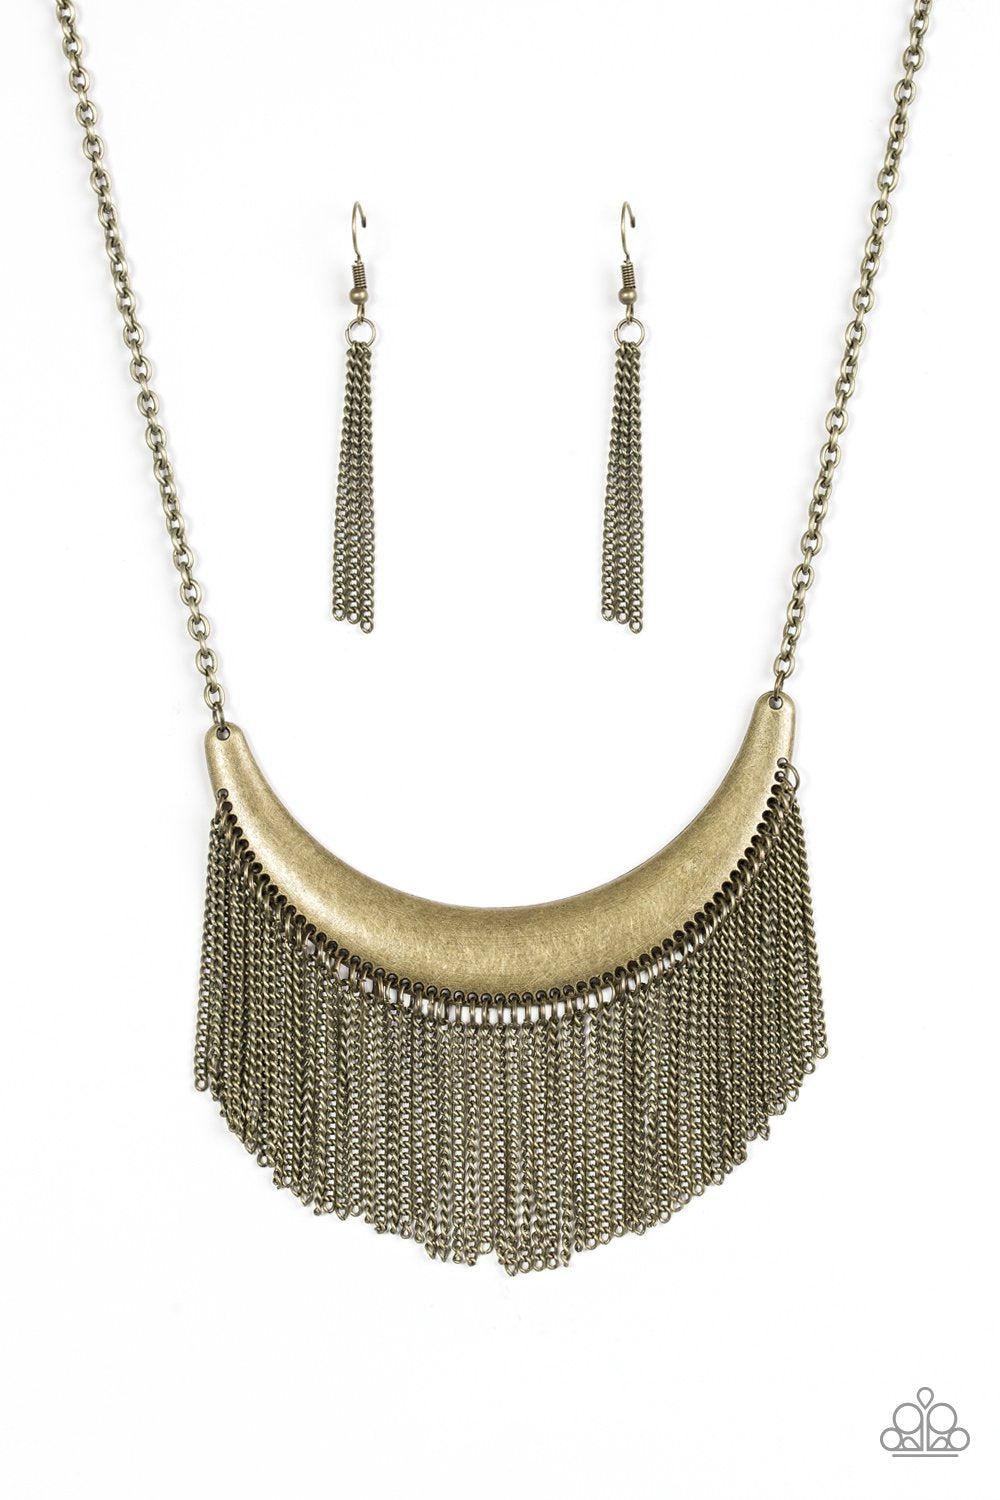 Zoo Zone Brass Fringe Necklace - Paparazzi Accessories-CarasShop.com - $5 Jewelry by Cara Jewels